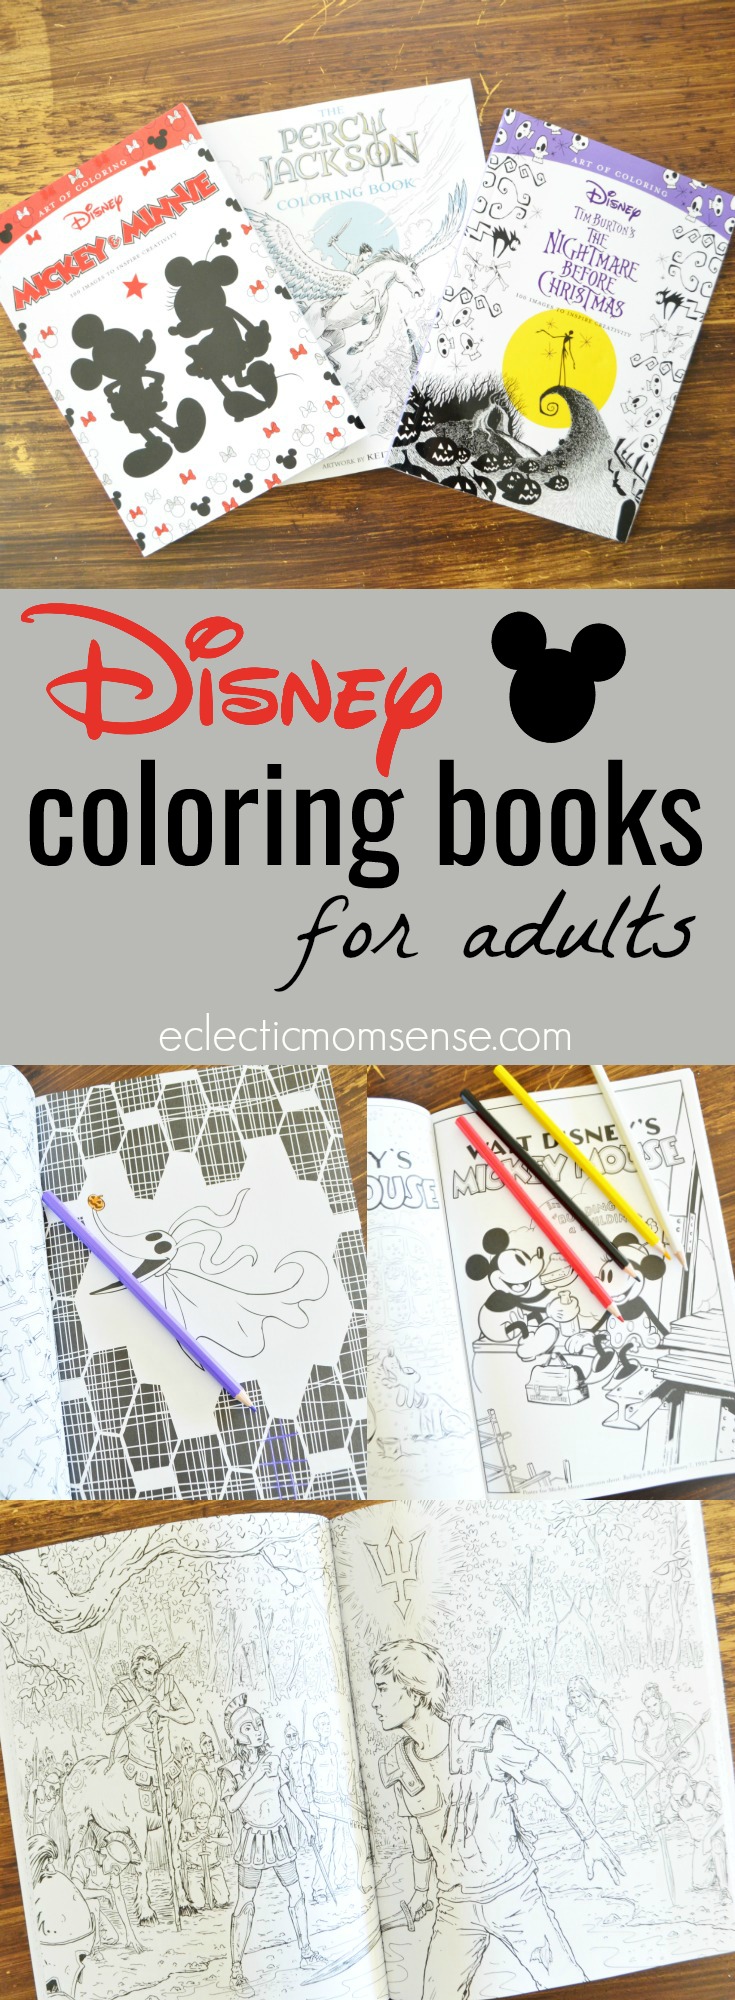 Disney coloring books